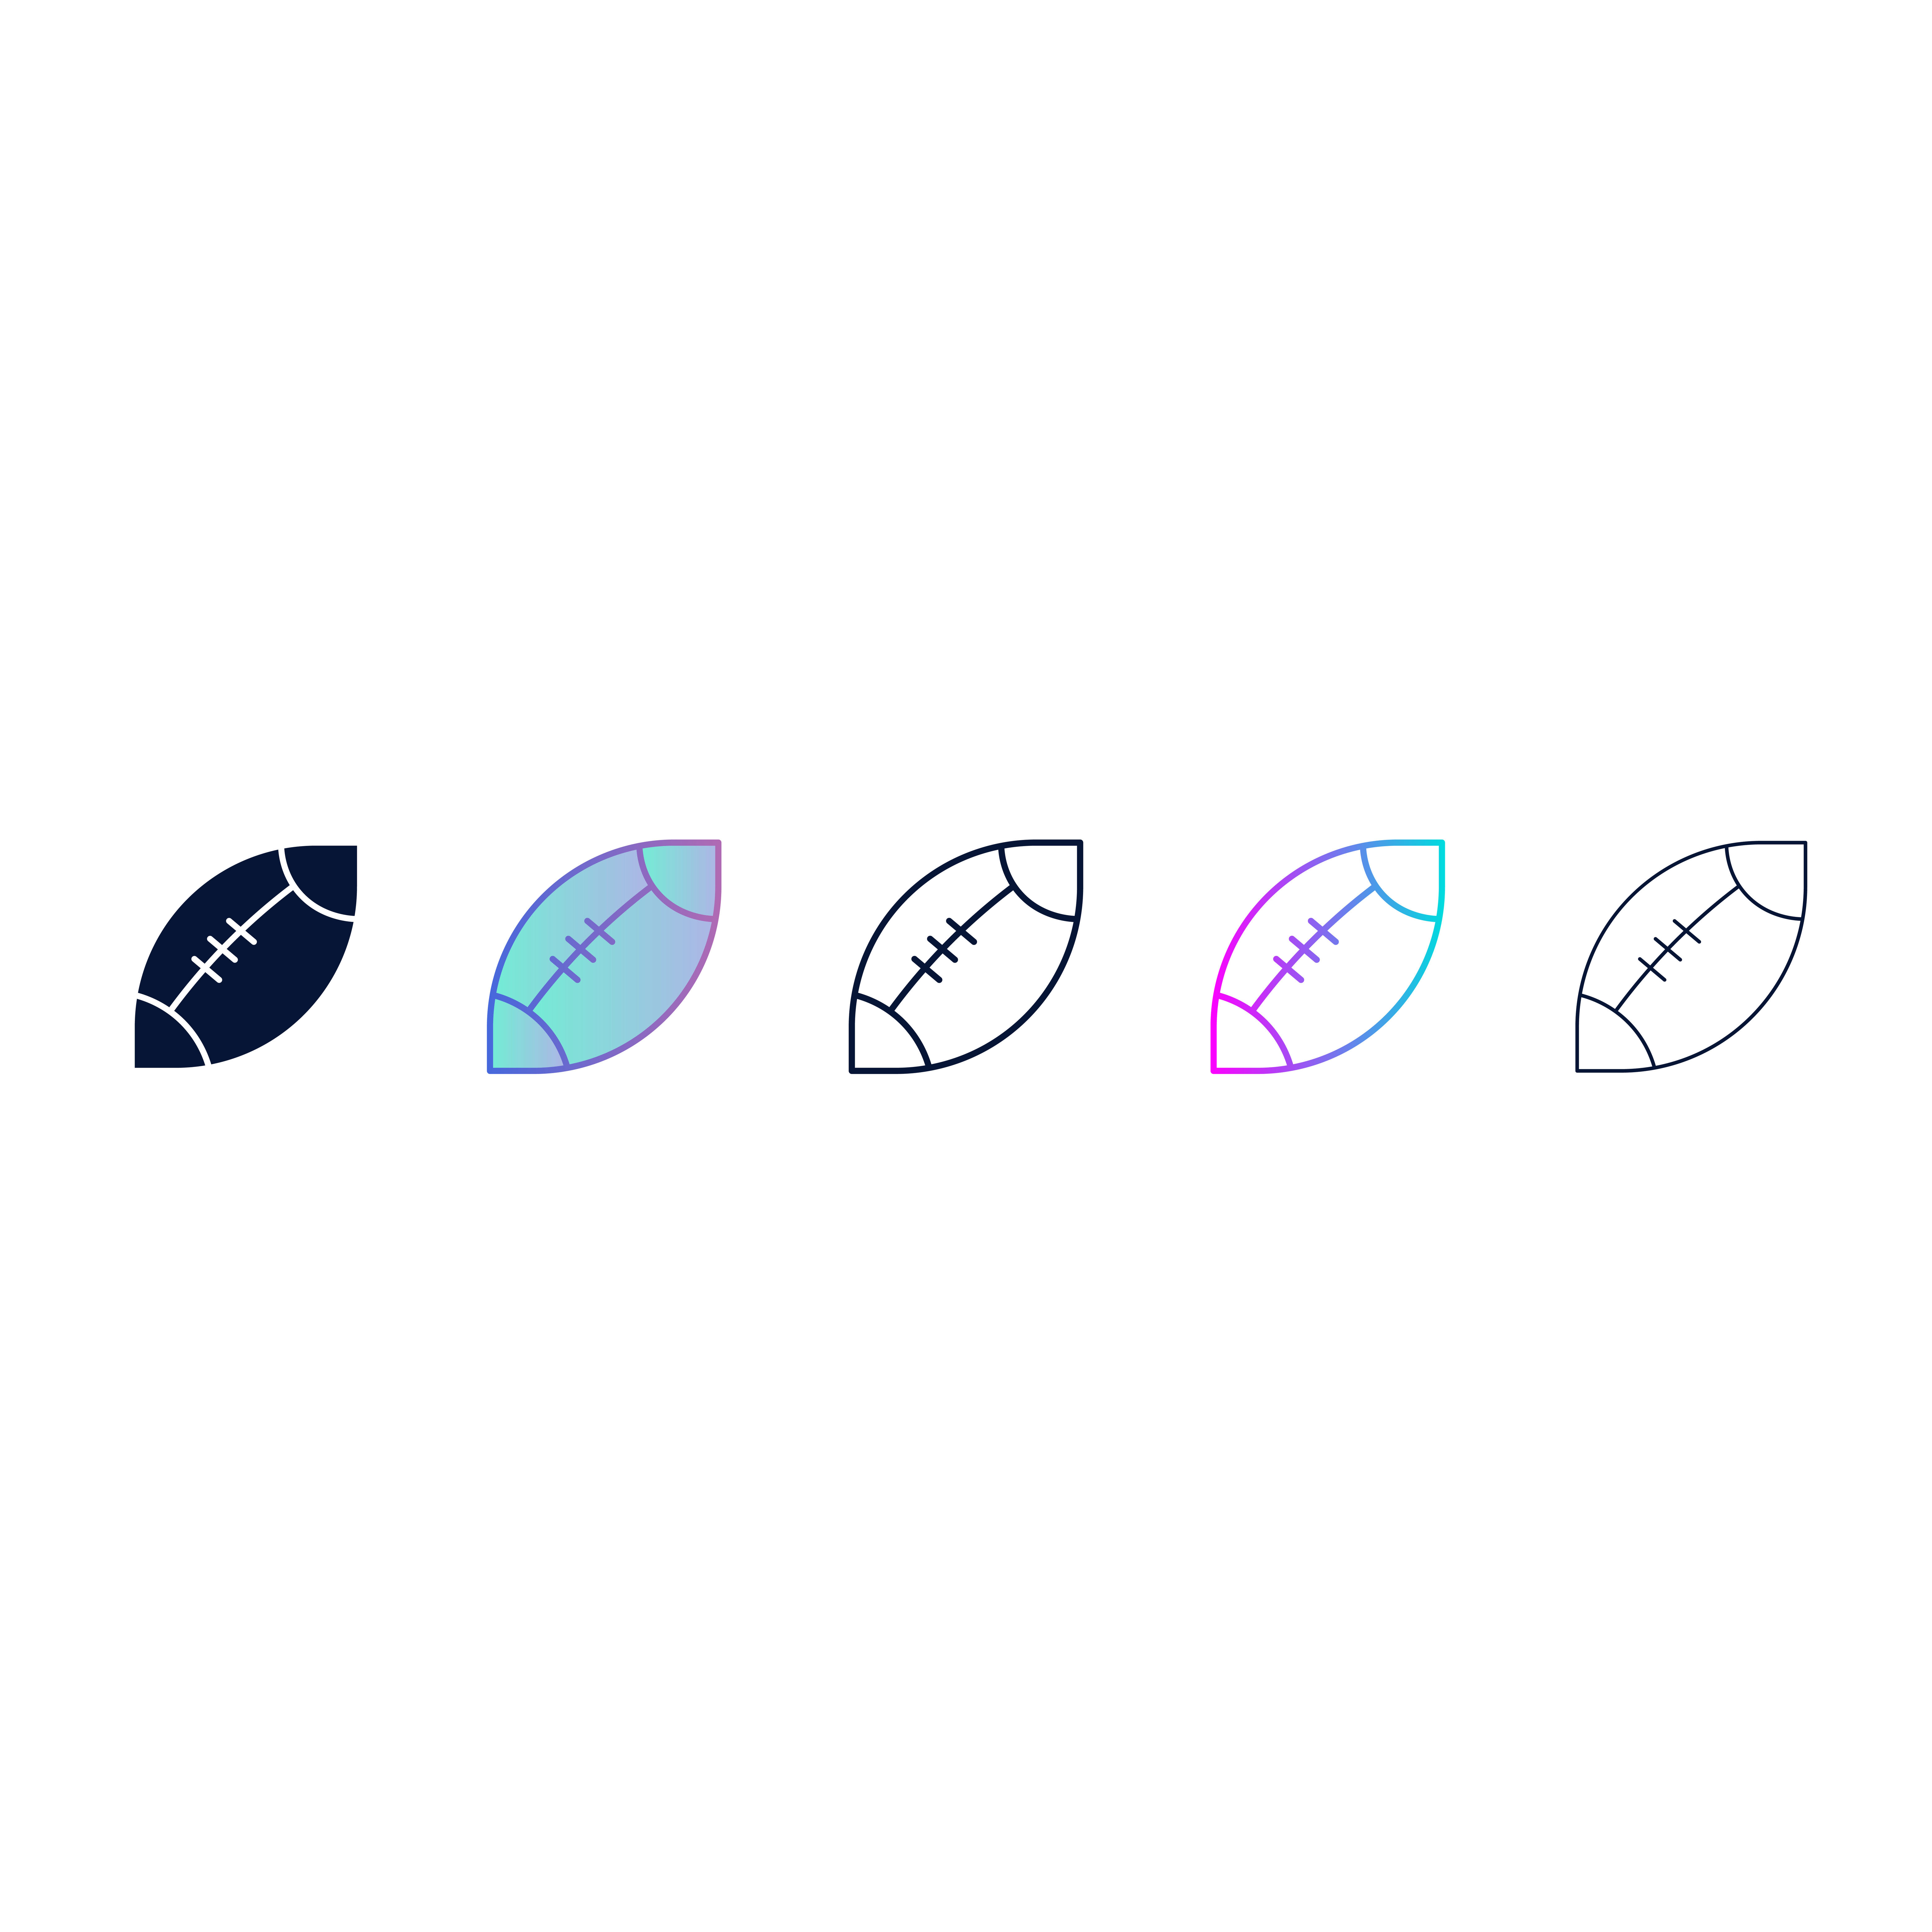 Image of 5 multi-color footballs